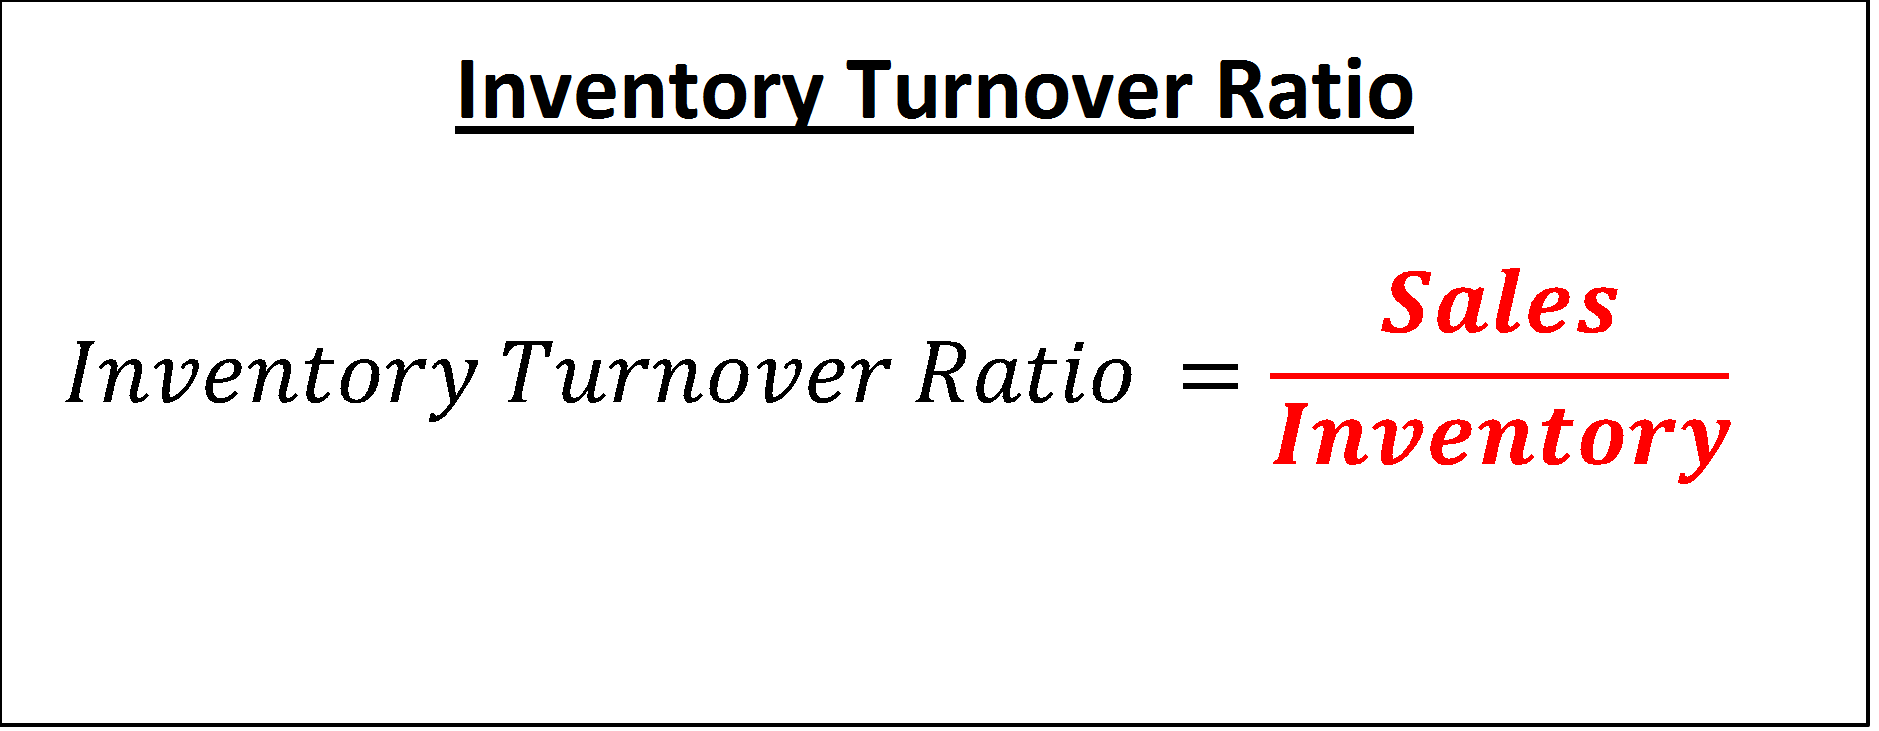 inventory turnover formula